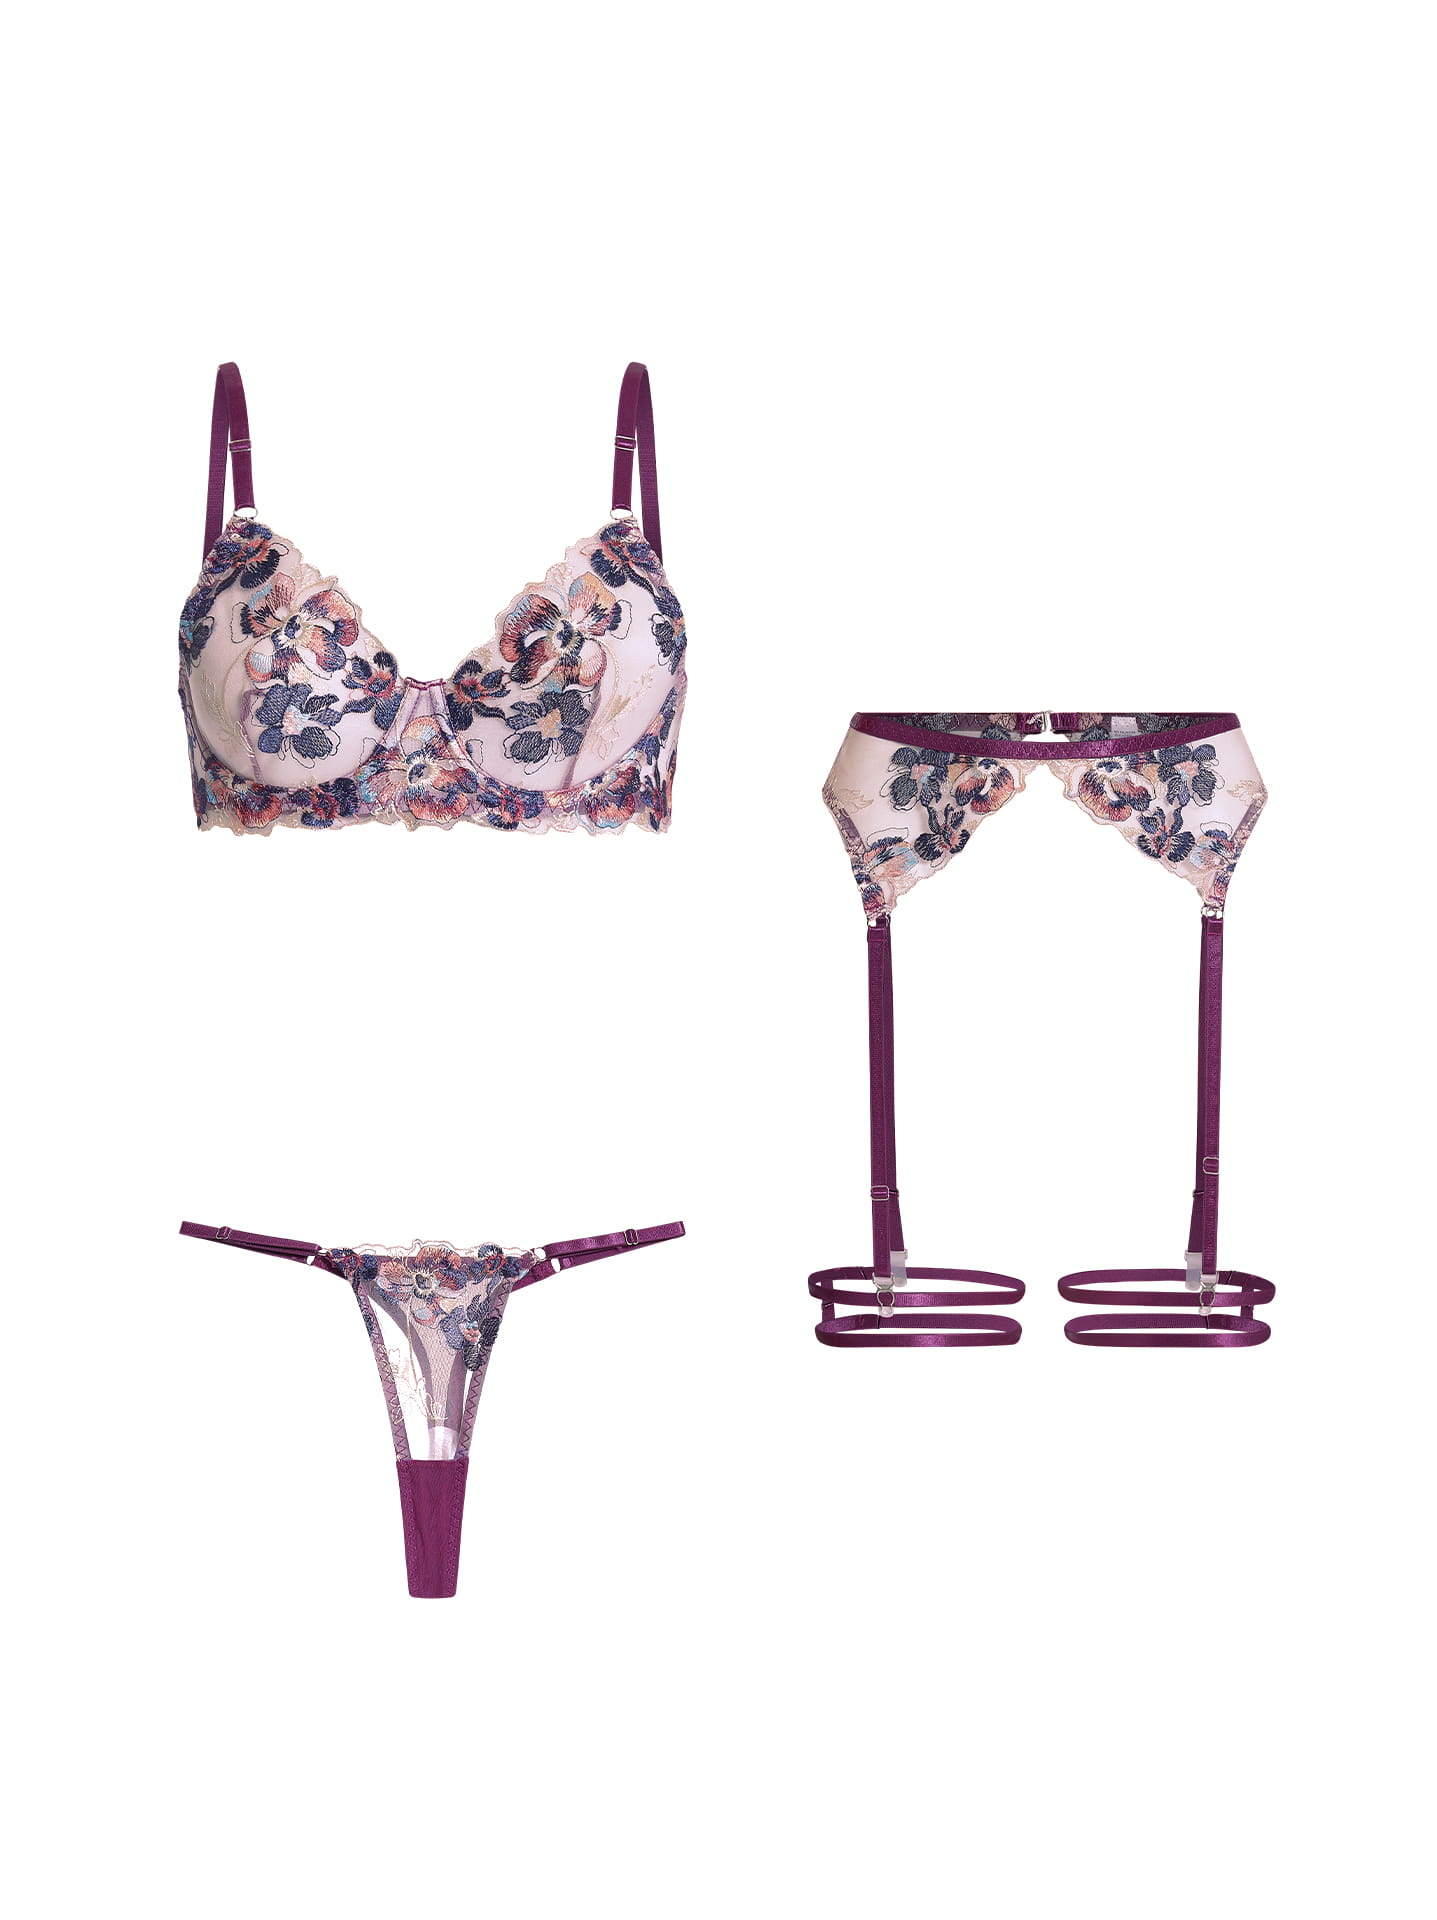 Semi sheer lingerie set 3 pieces in purple, 19.99€